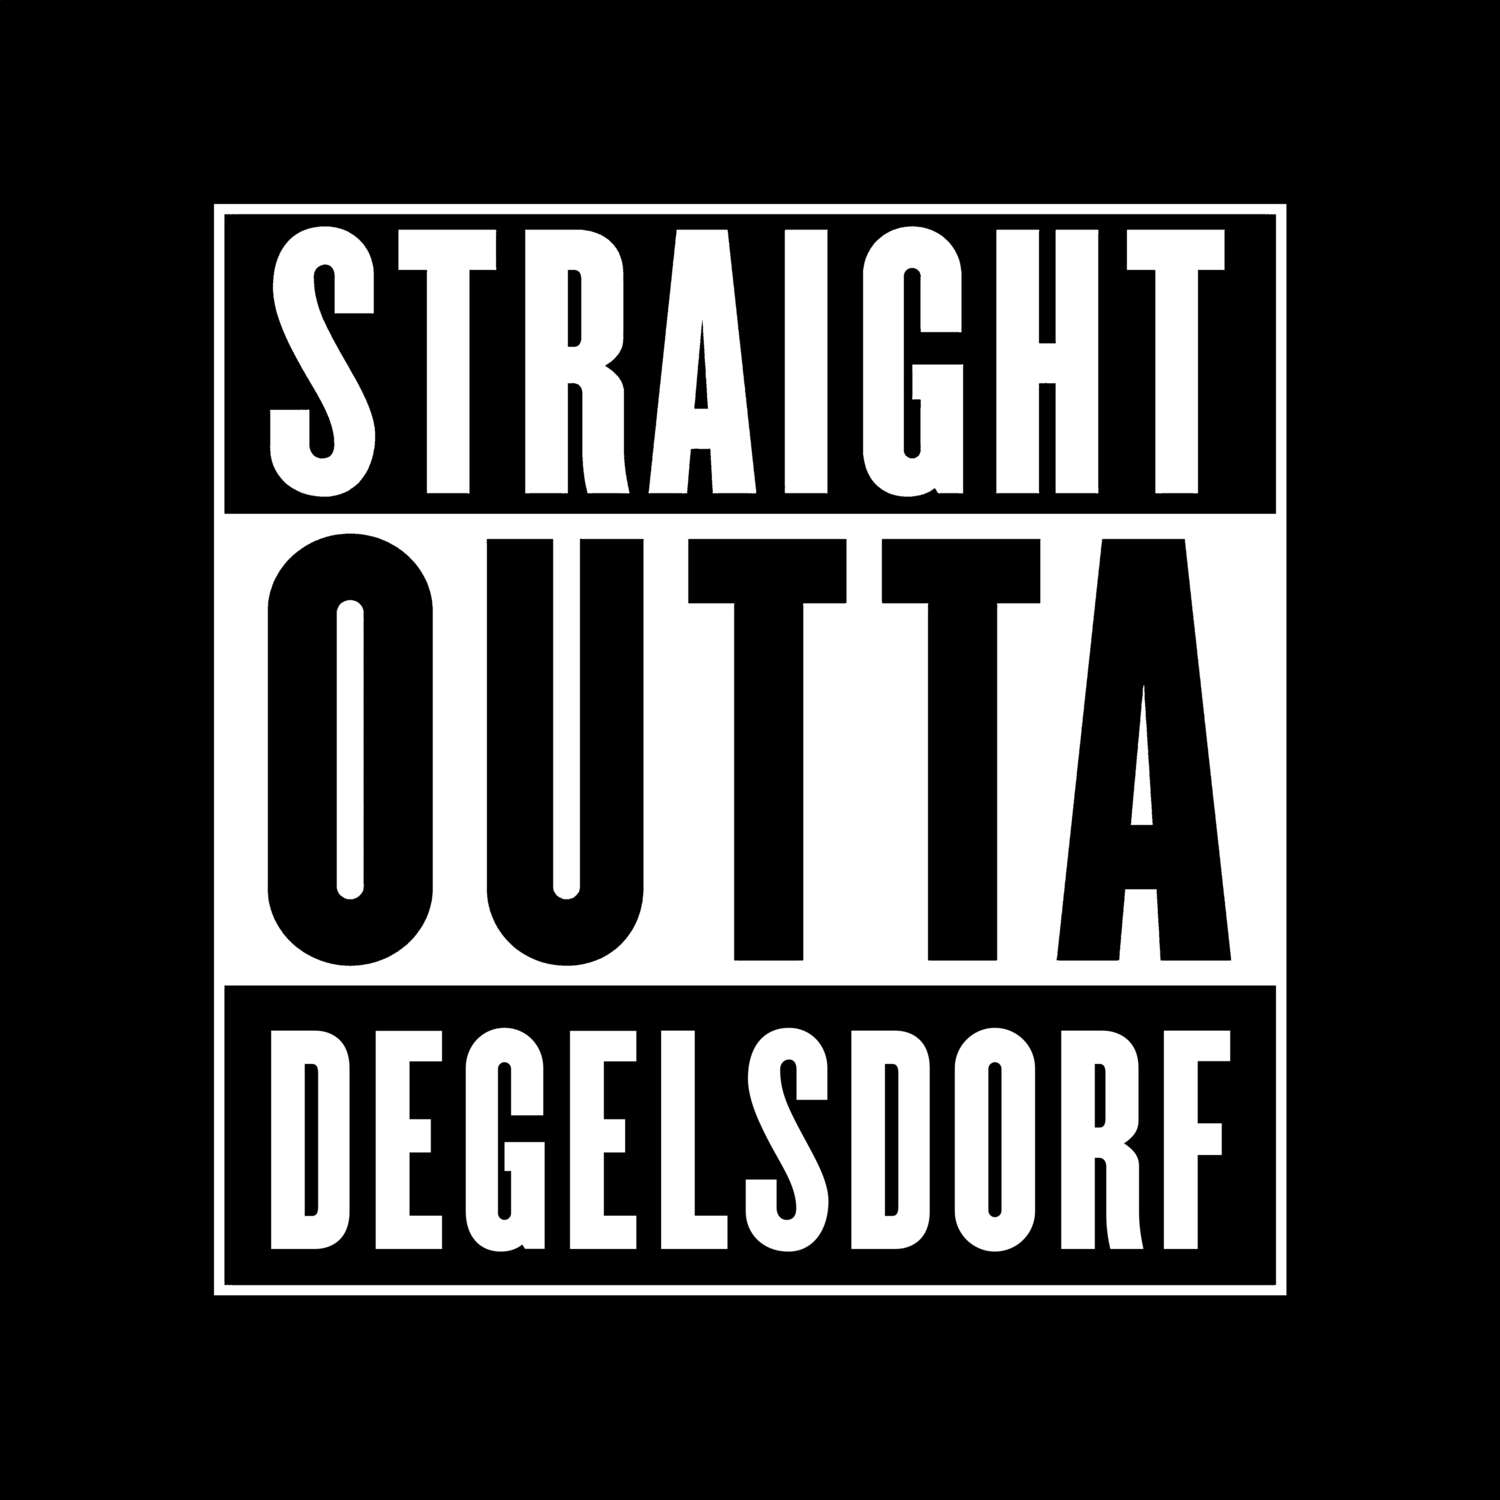 Degelsdorf T-Shirt »Straight Outta«